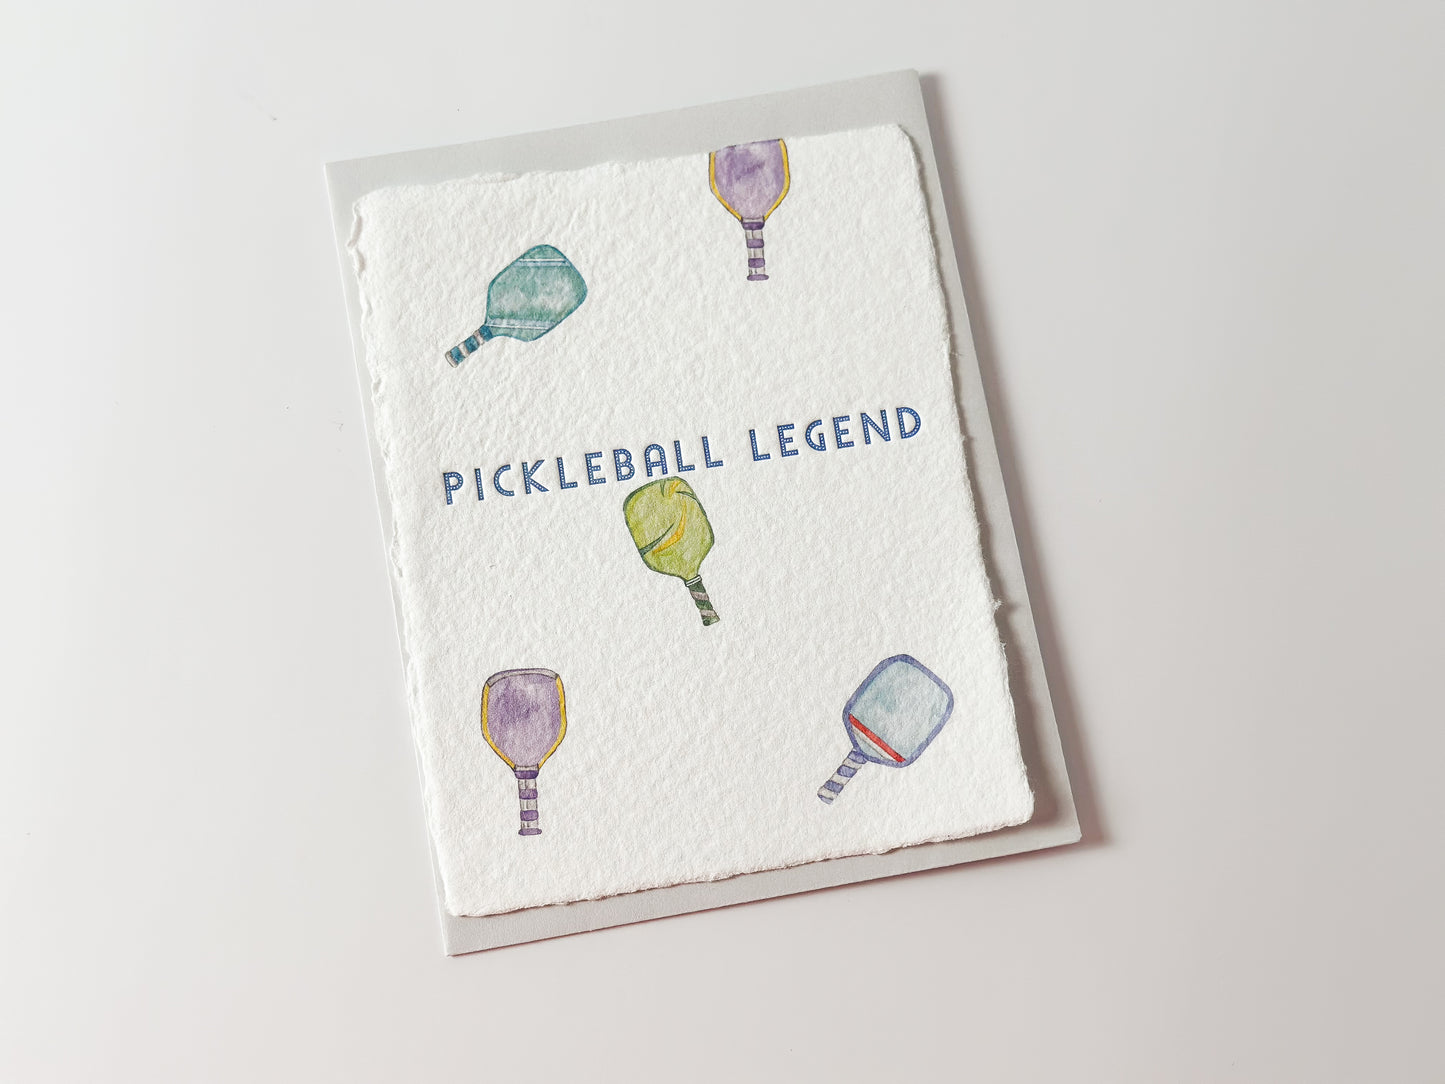 Pickleball Legend Card